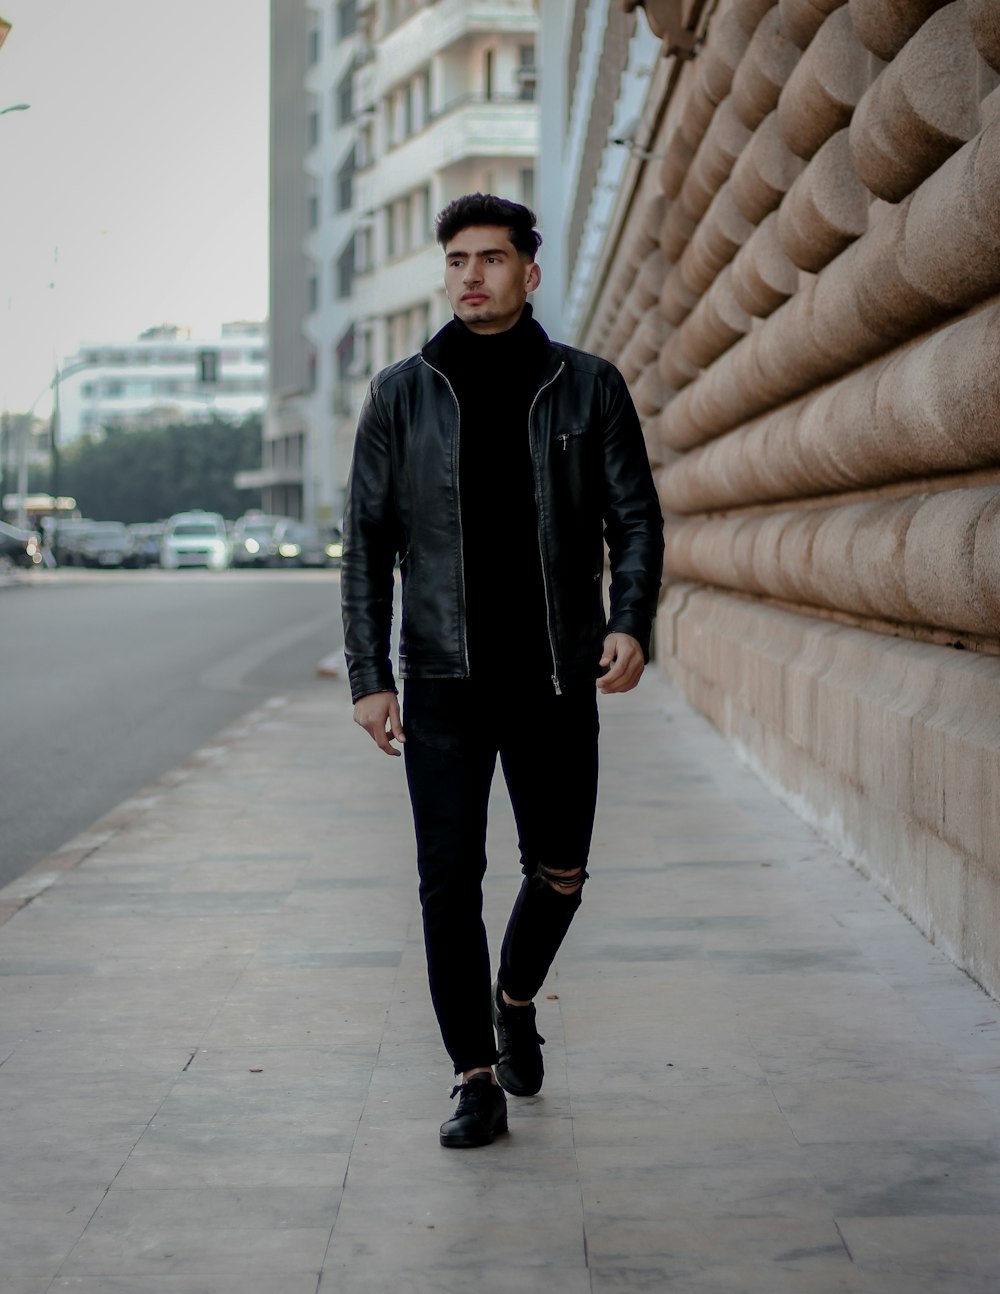 man in black leather jacket standing on sidewalk during daytime